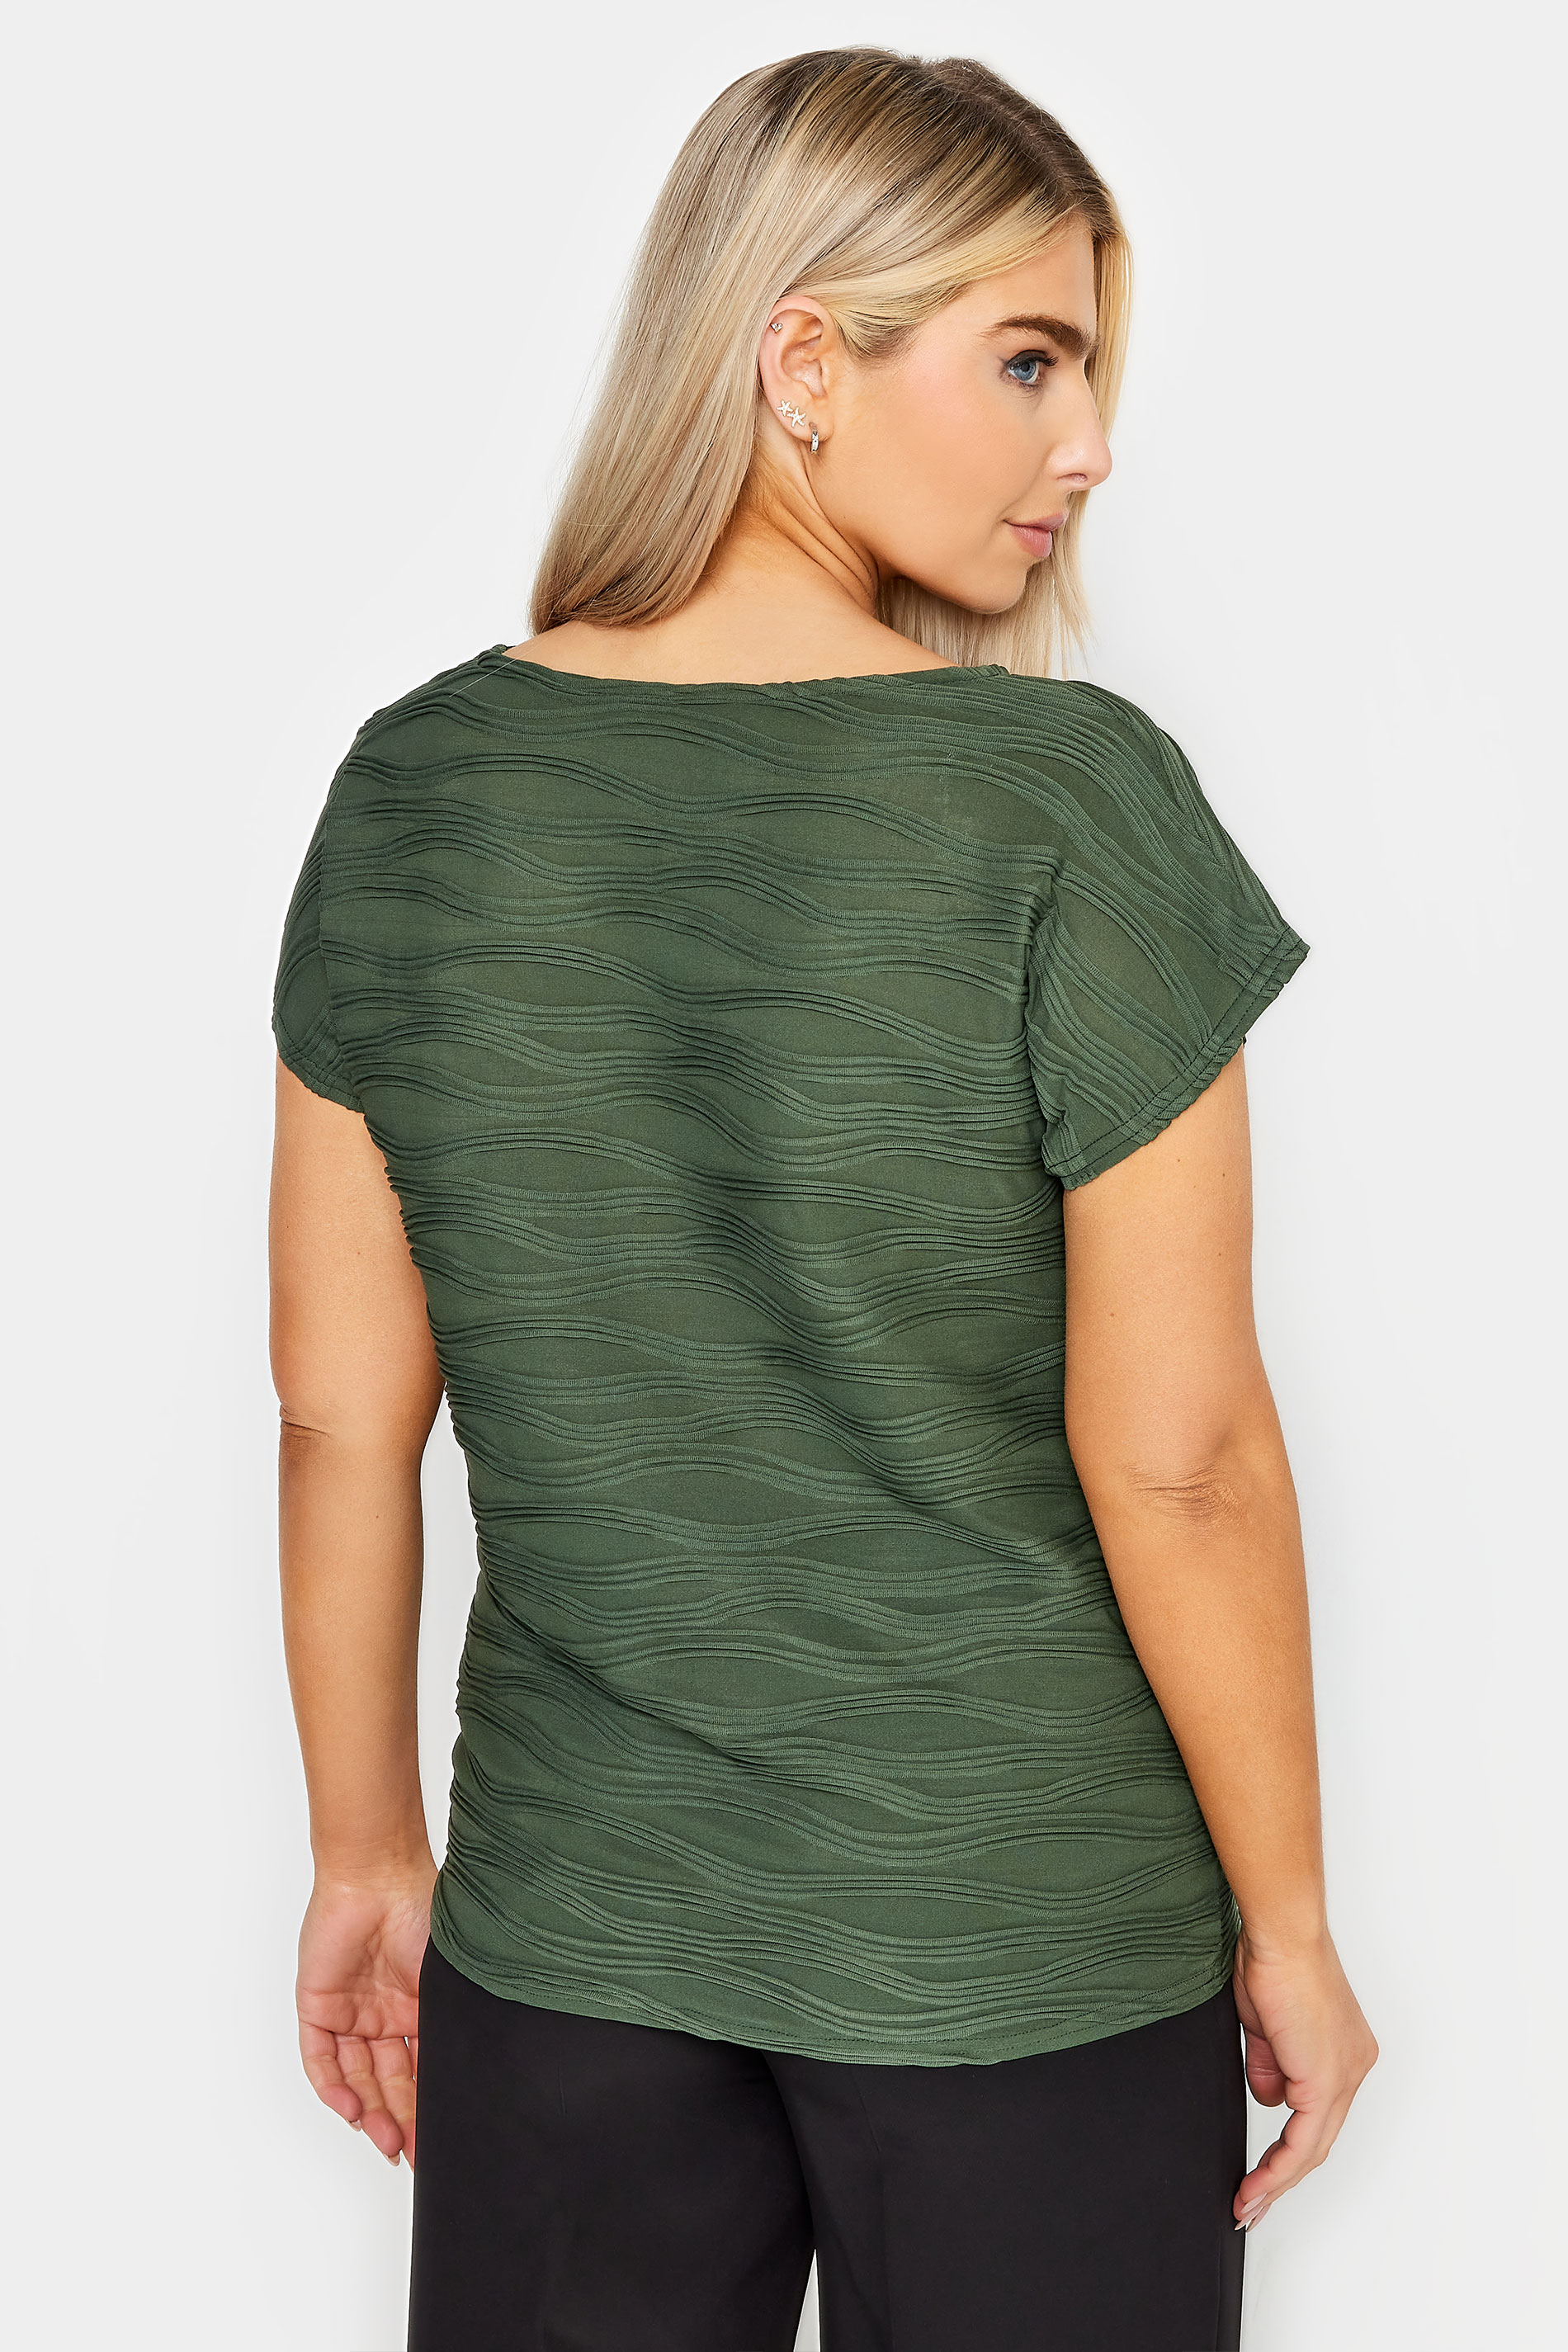 M&Co Khaki Green Textured Top | M&Co 3